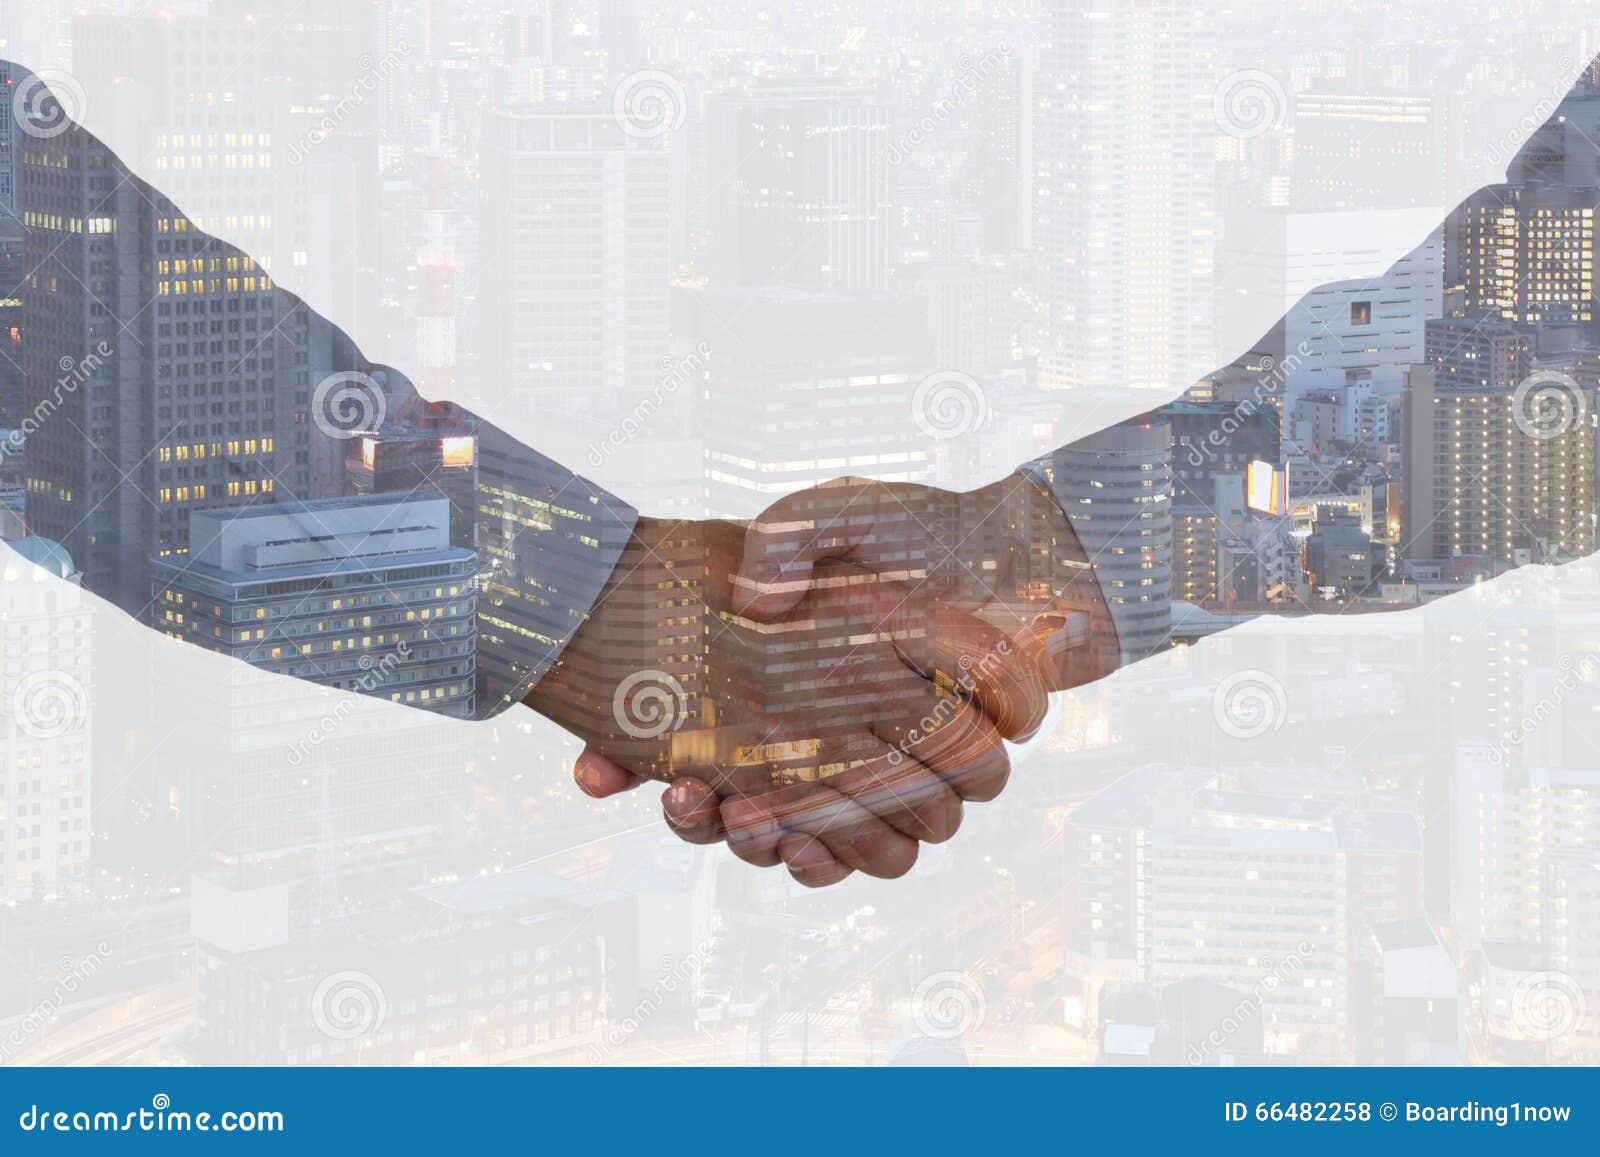 handshake business hand shake shaking hands deal success welcome